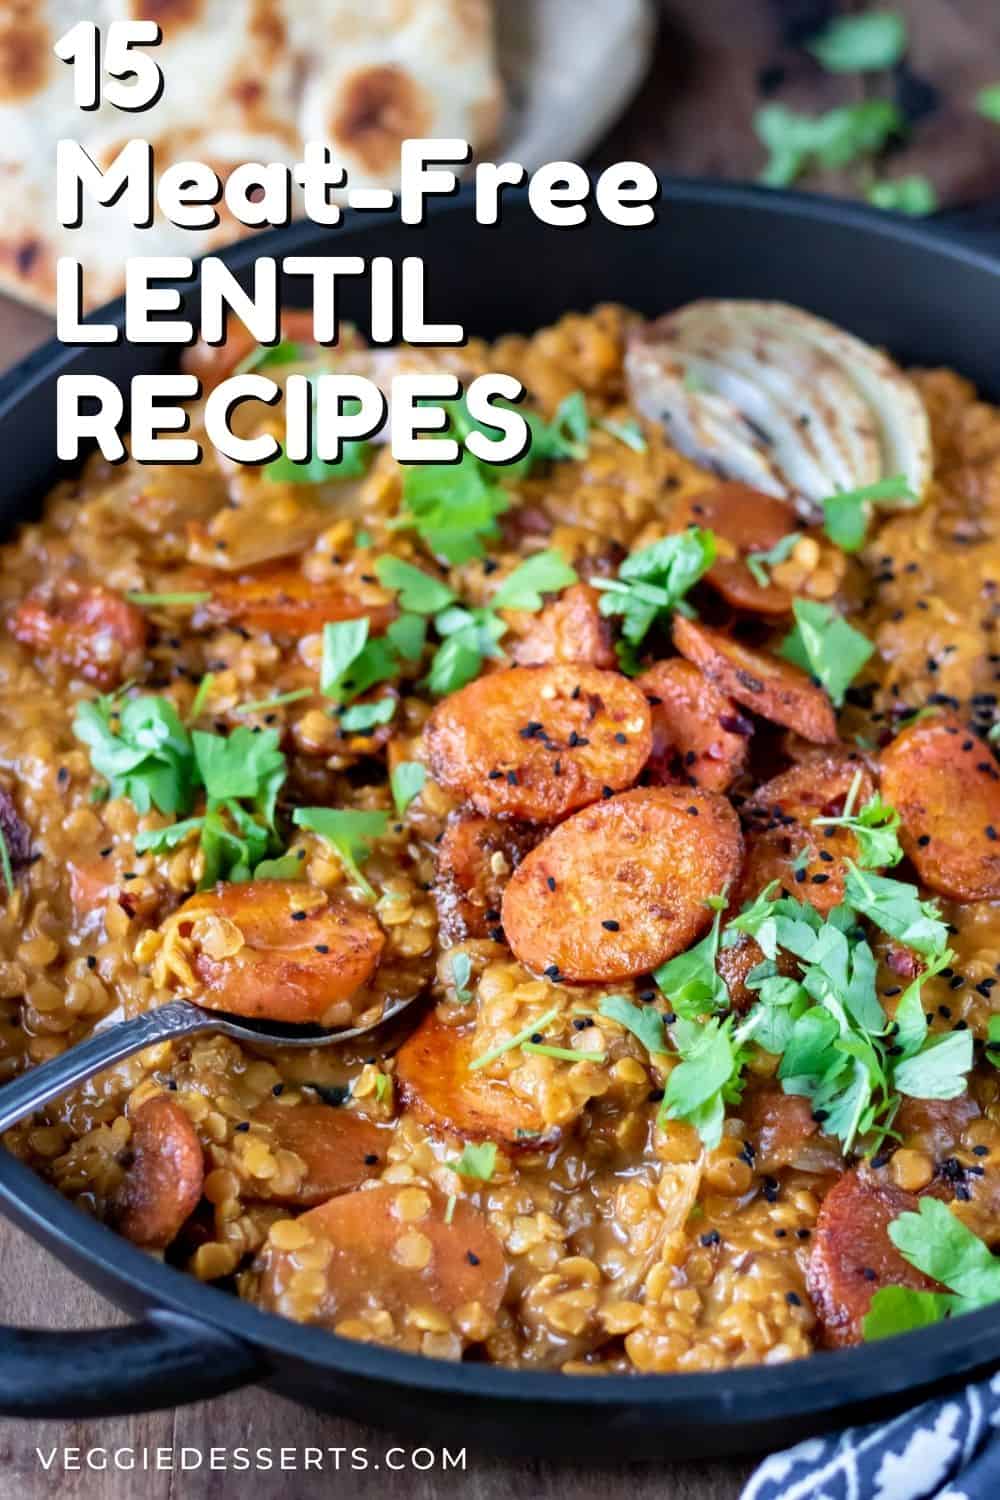 Lentil curry, with text: Lentil Recipes.